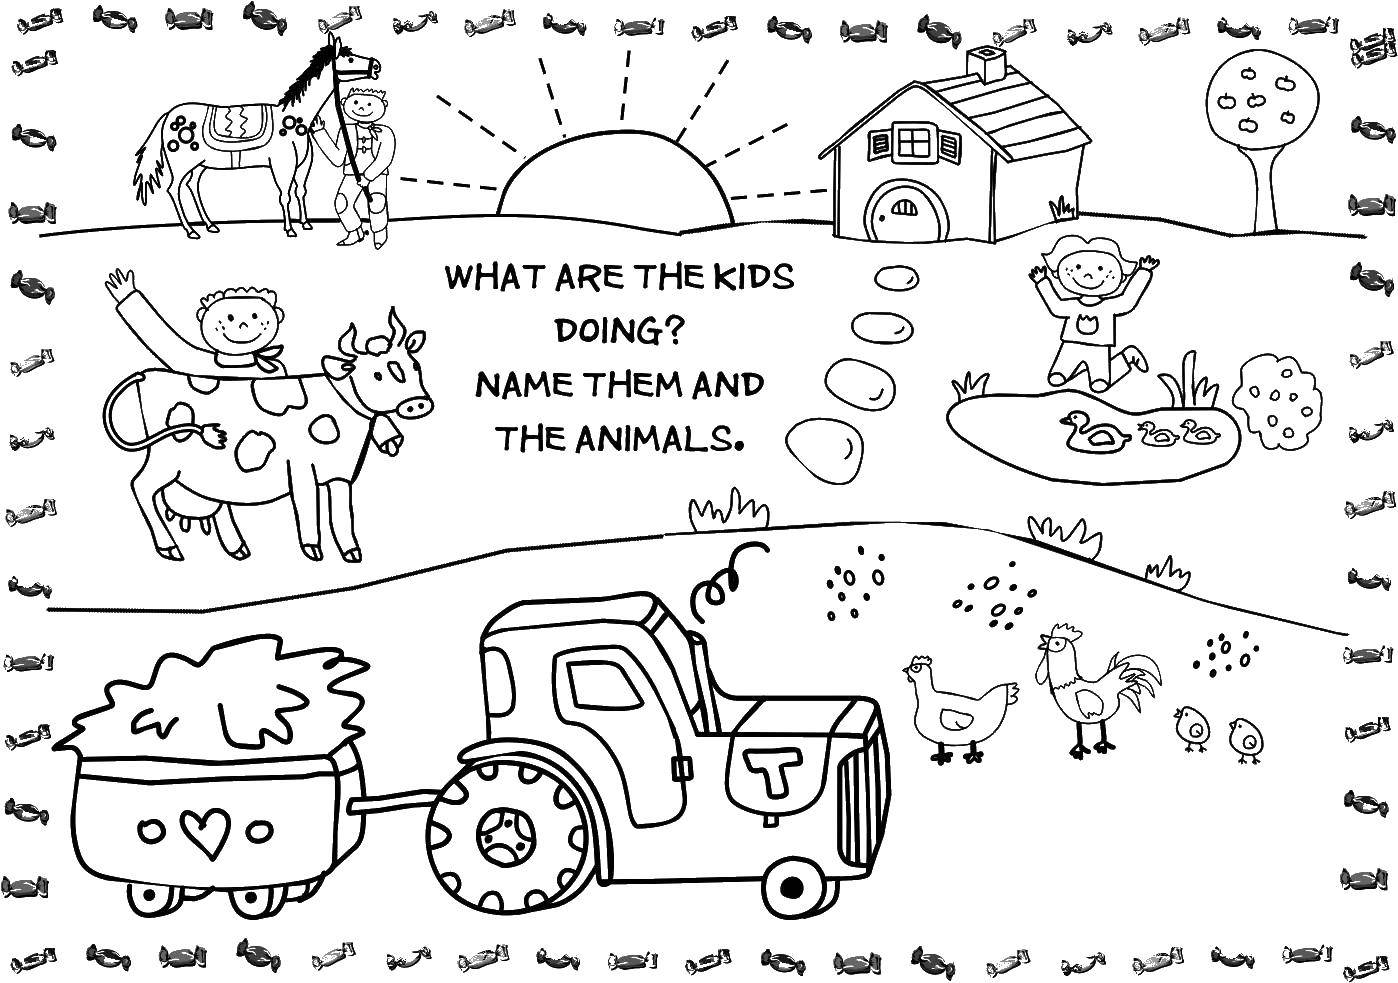 Coloring Farm. Category animals. Tags:  animals, farm.